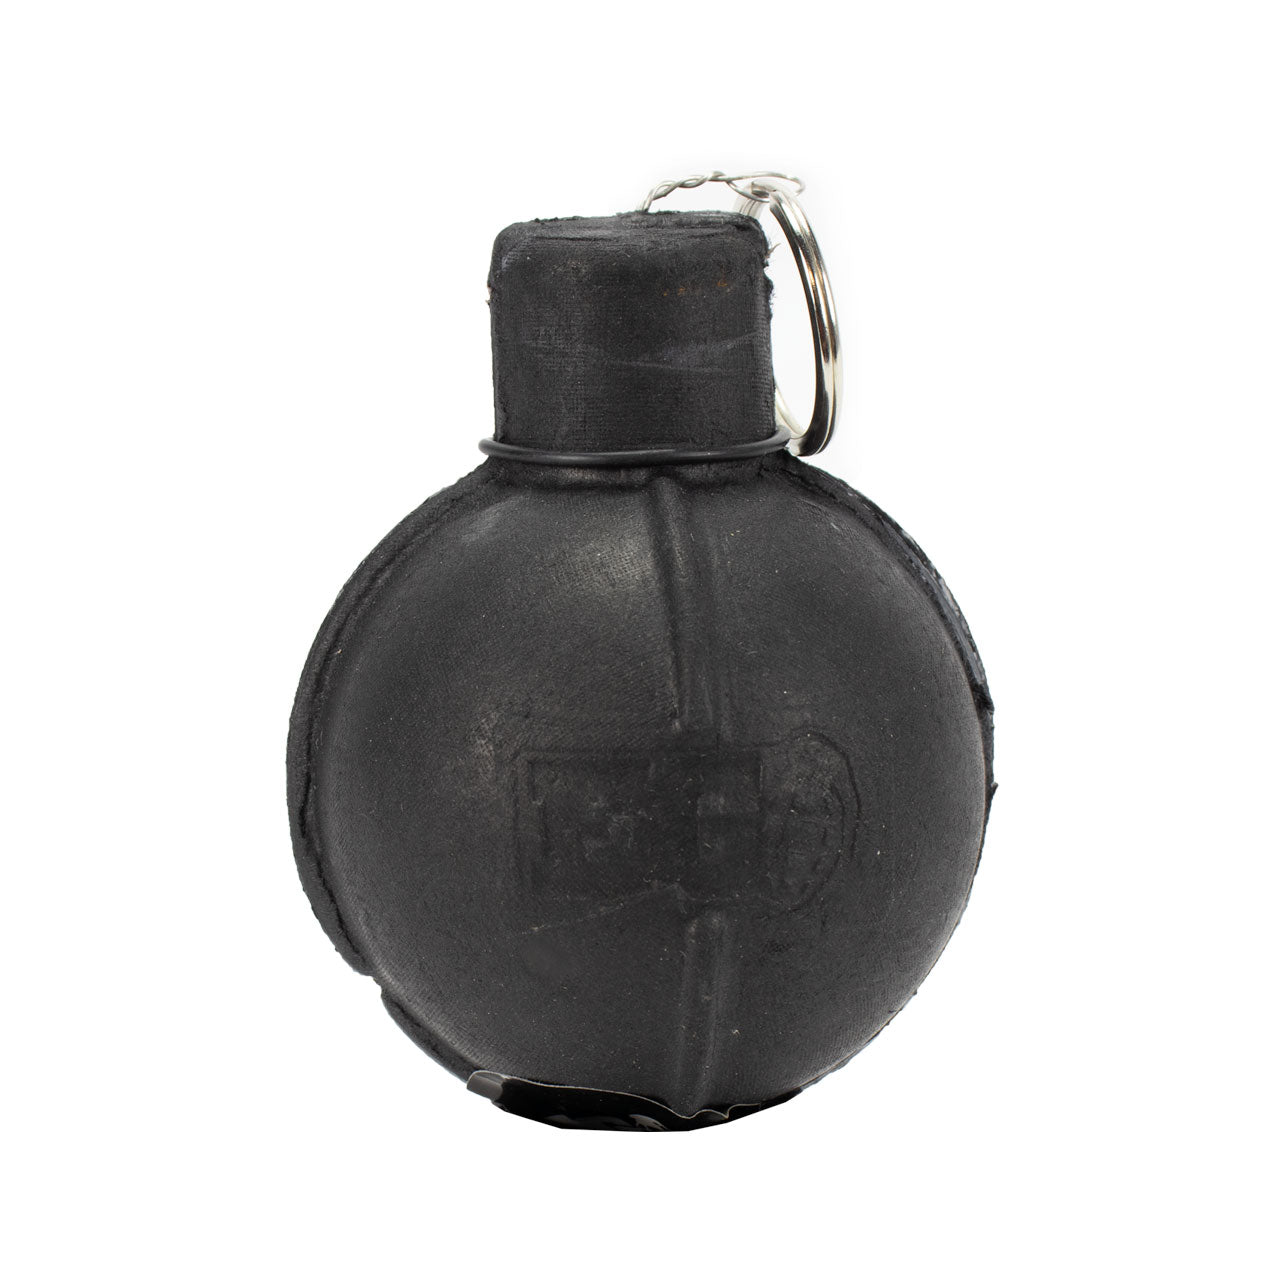 Enola Gaye EG67 Pea Frag Grenade – Simple Airsoft